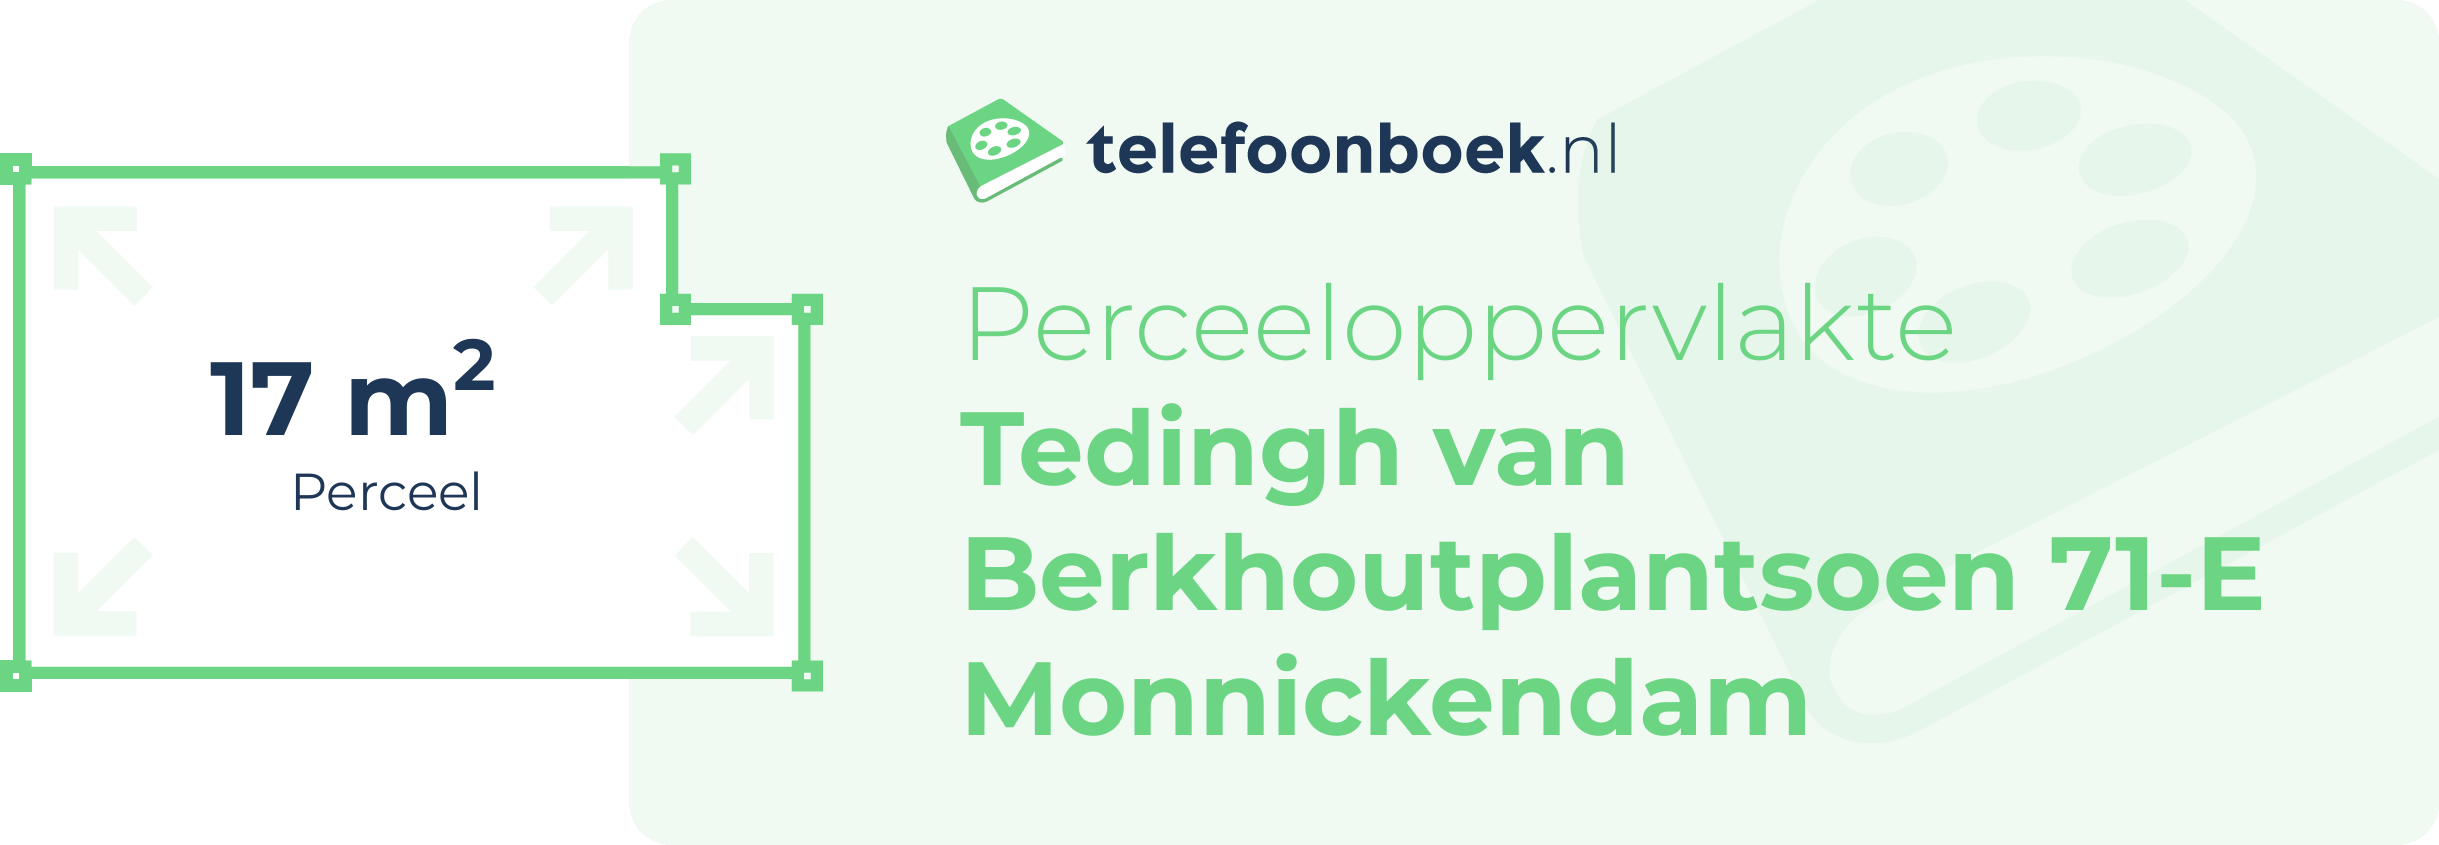 Perceeloppervlakte Tedingh Van Berkhoutplantsoen 71-E Monnickendam